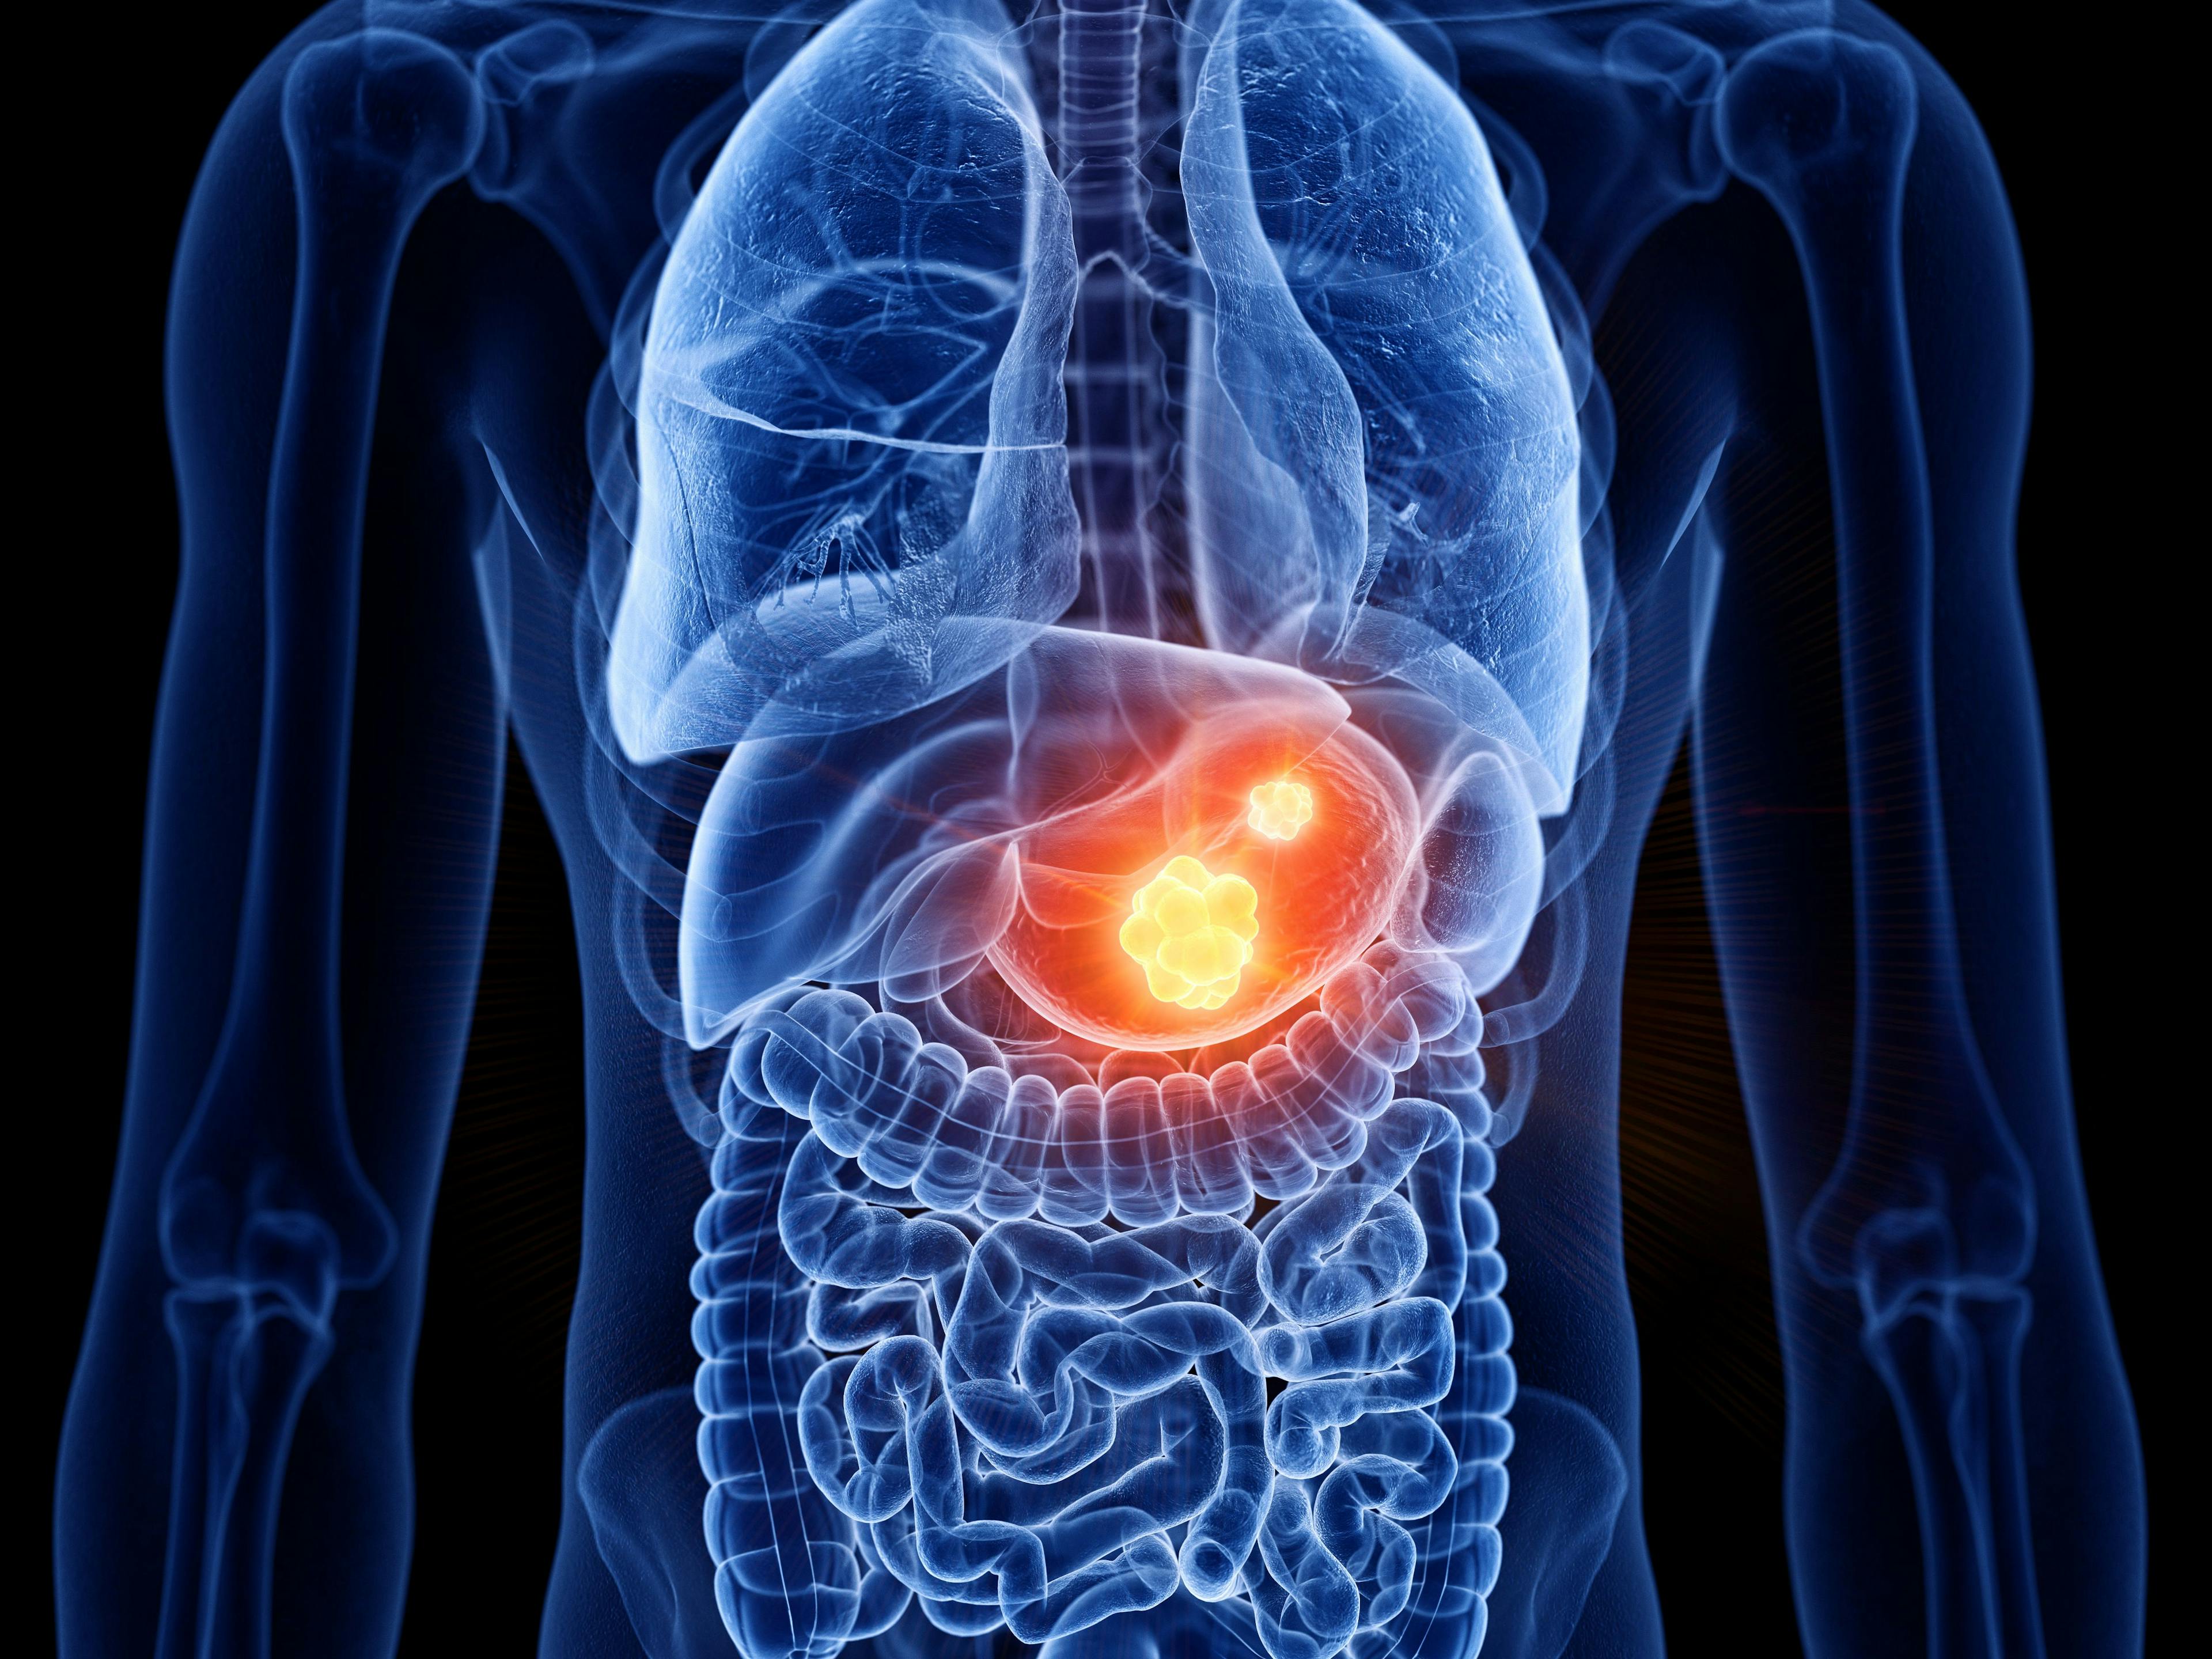 X-ray of tumor in stomach -- Image credit: Sebastian Kaulitzki | stock.adobe.com